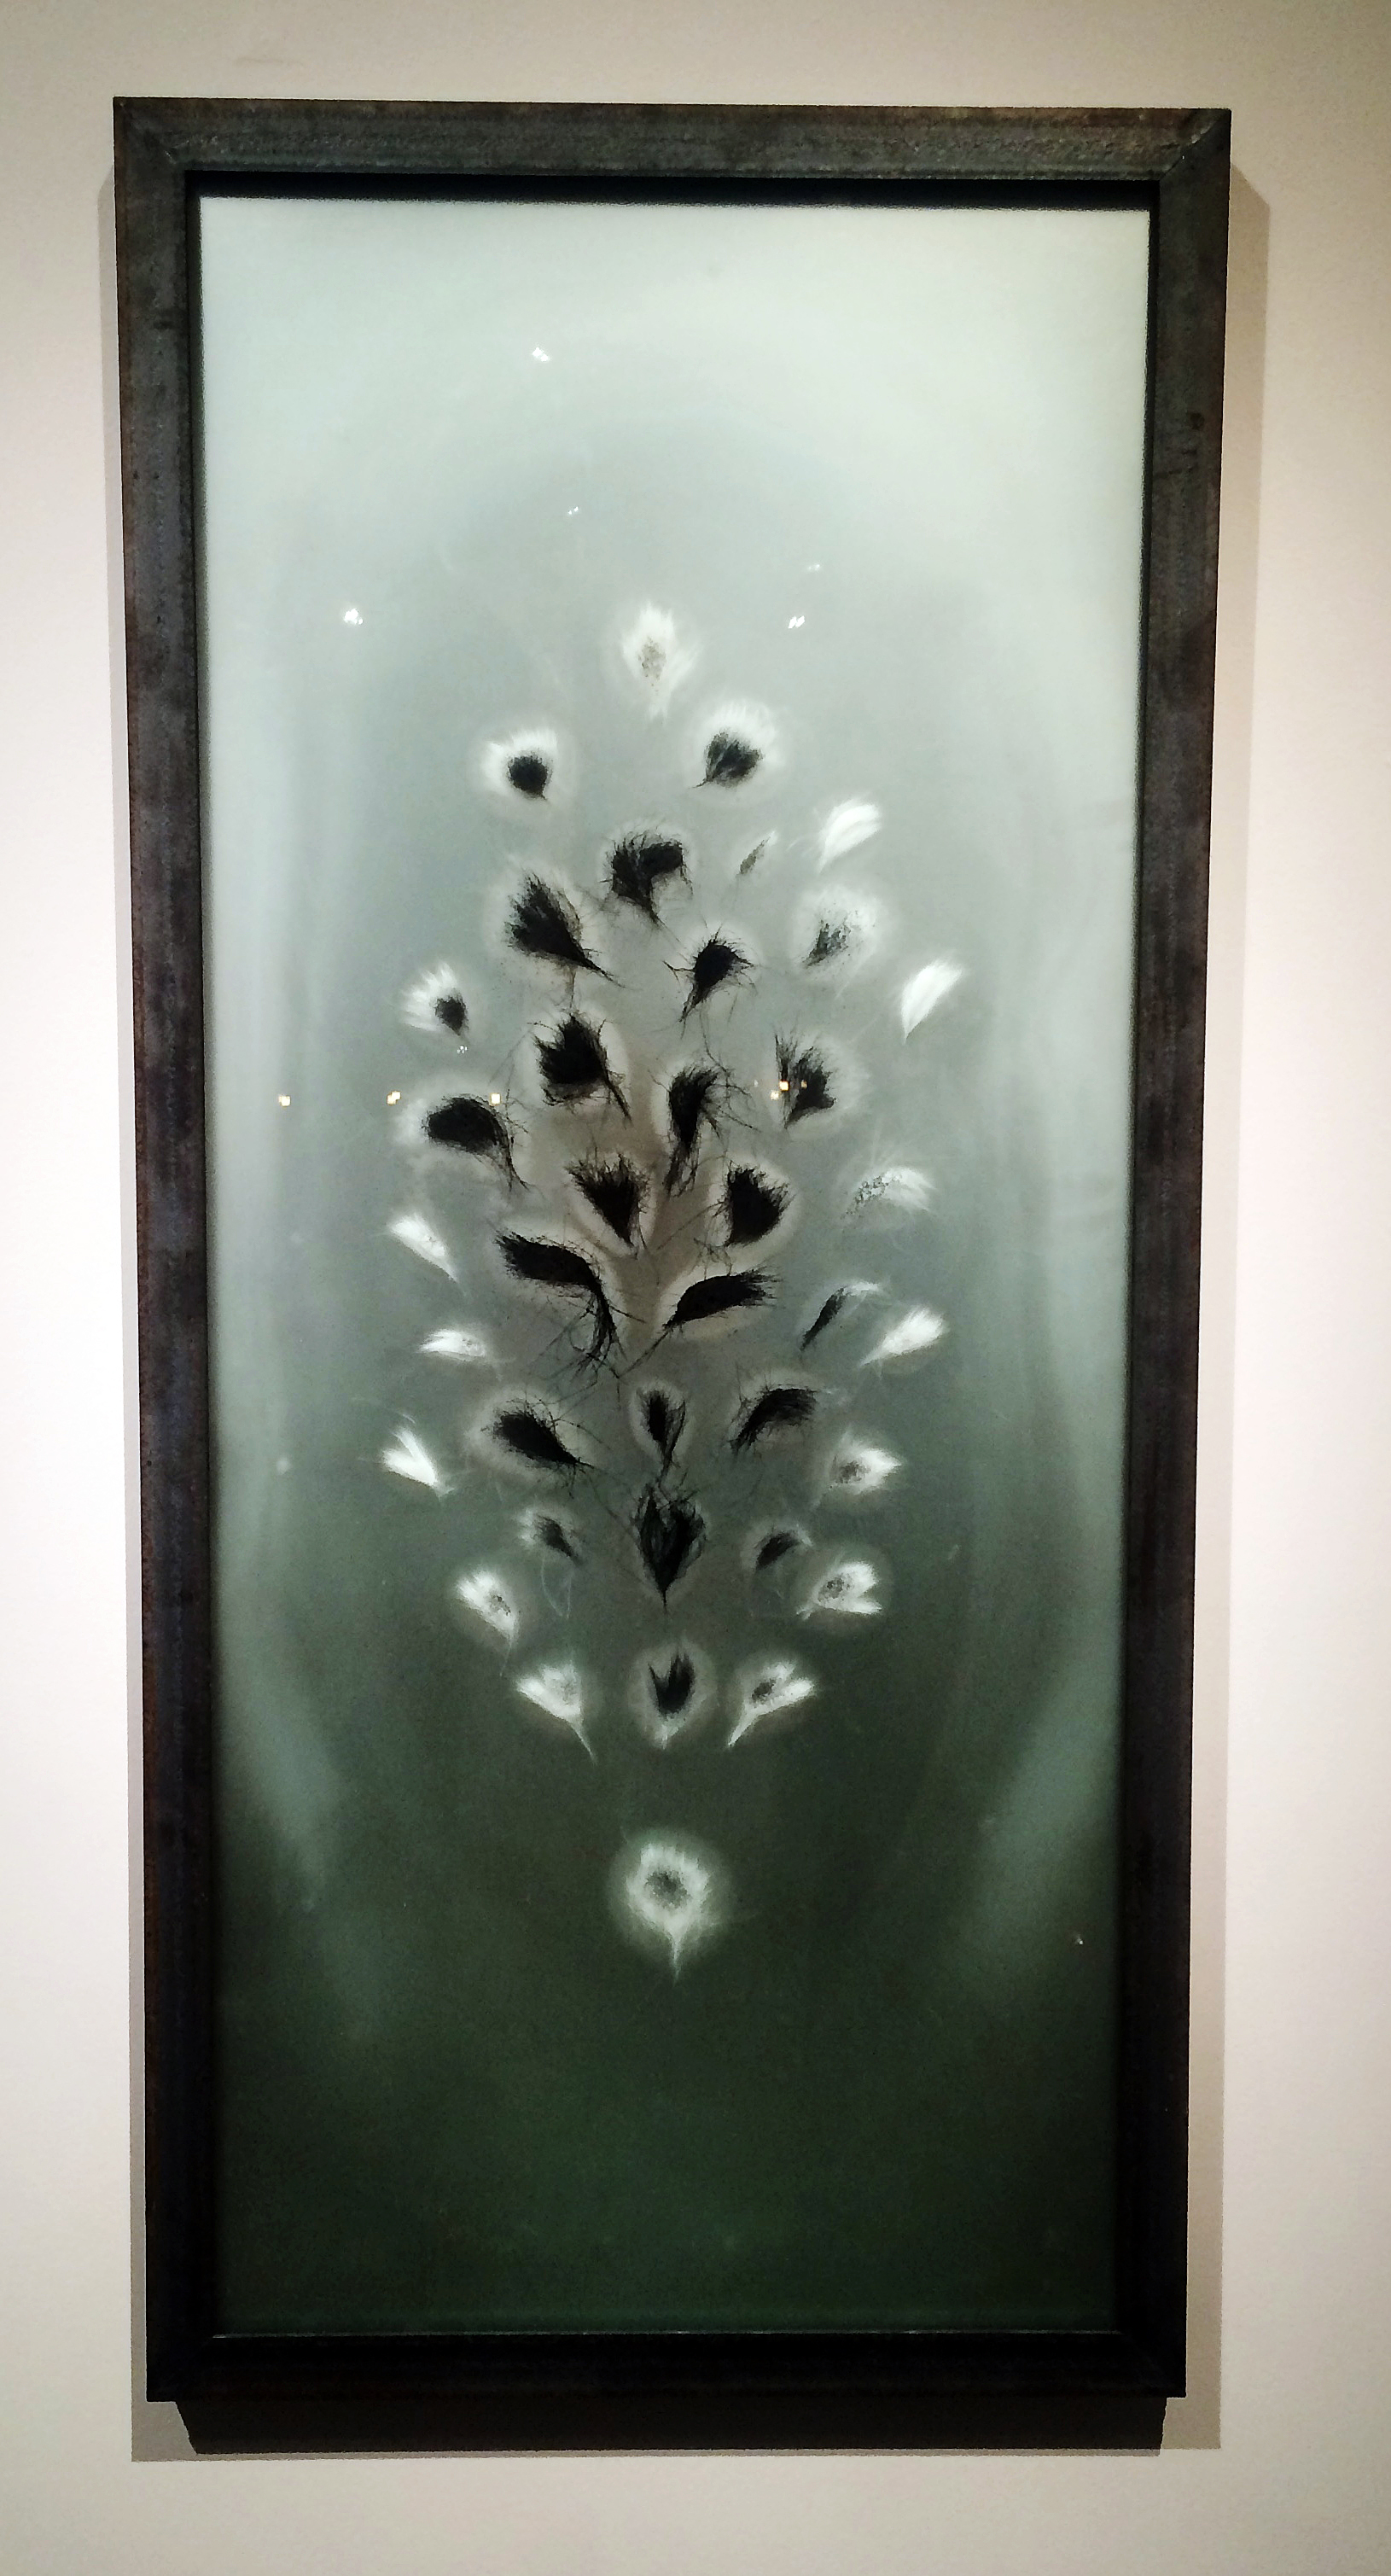 sharyn-omara-botanical-4-carbon-burnout-drawing-on-glass2016